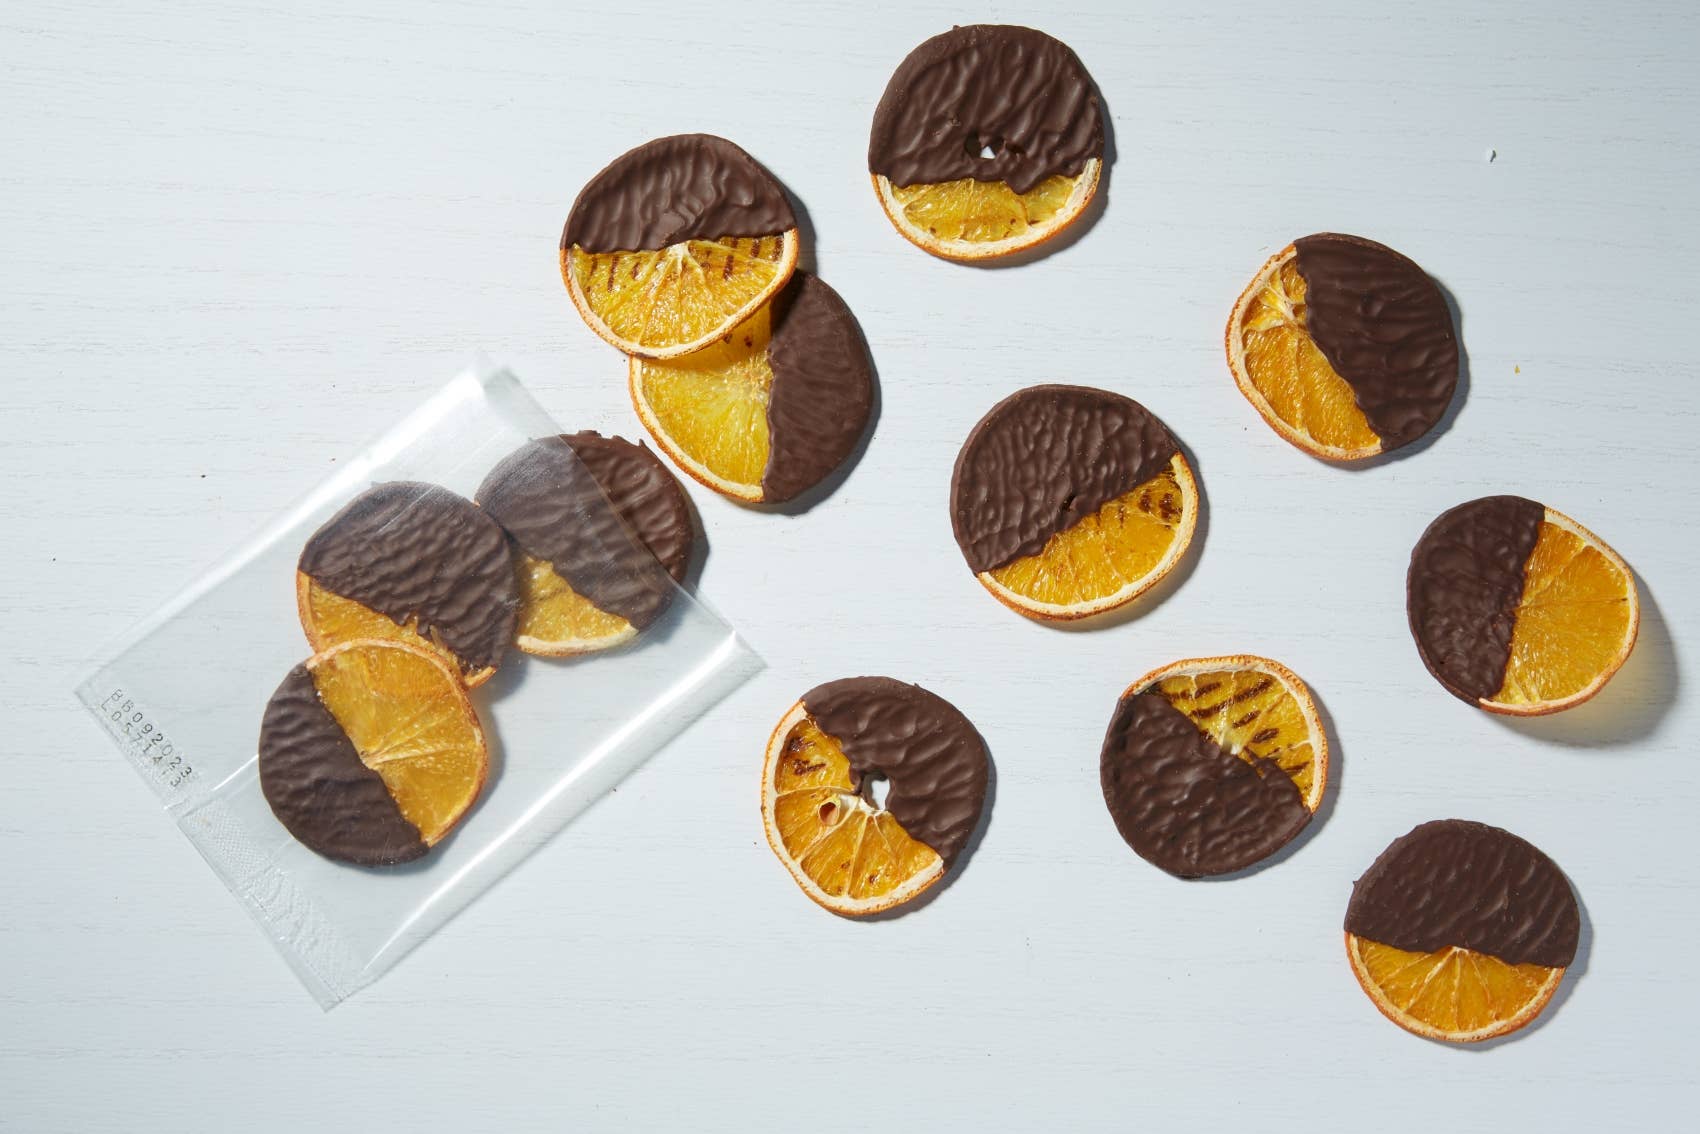 Crispy Dark Chocolate Orange Slices | Snack Pack: 0.8oz